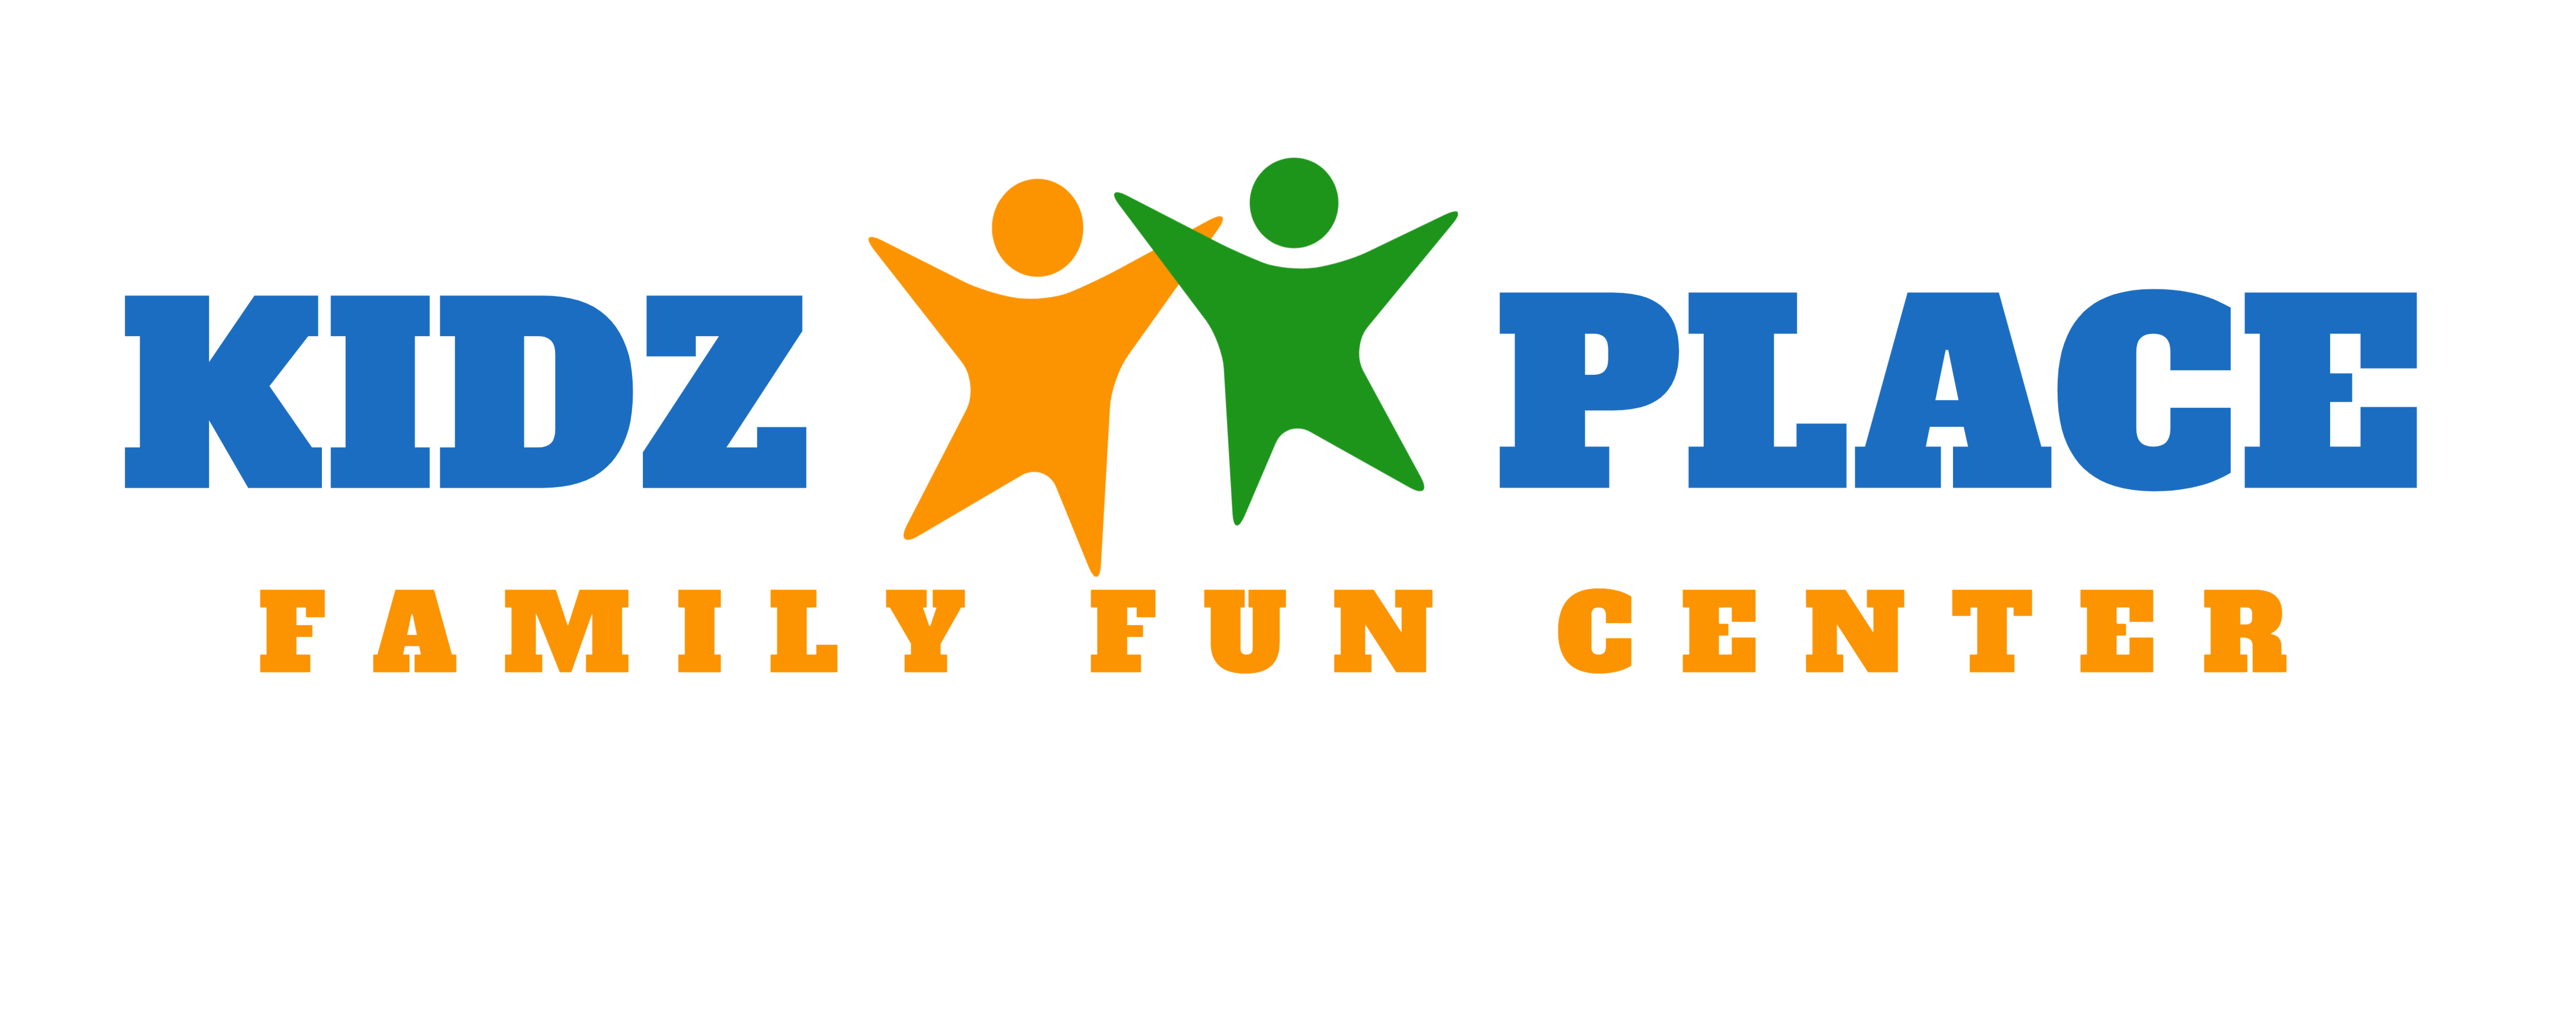 Kidz Place Family Fun Center